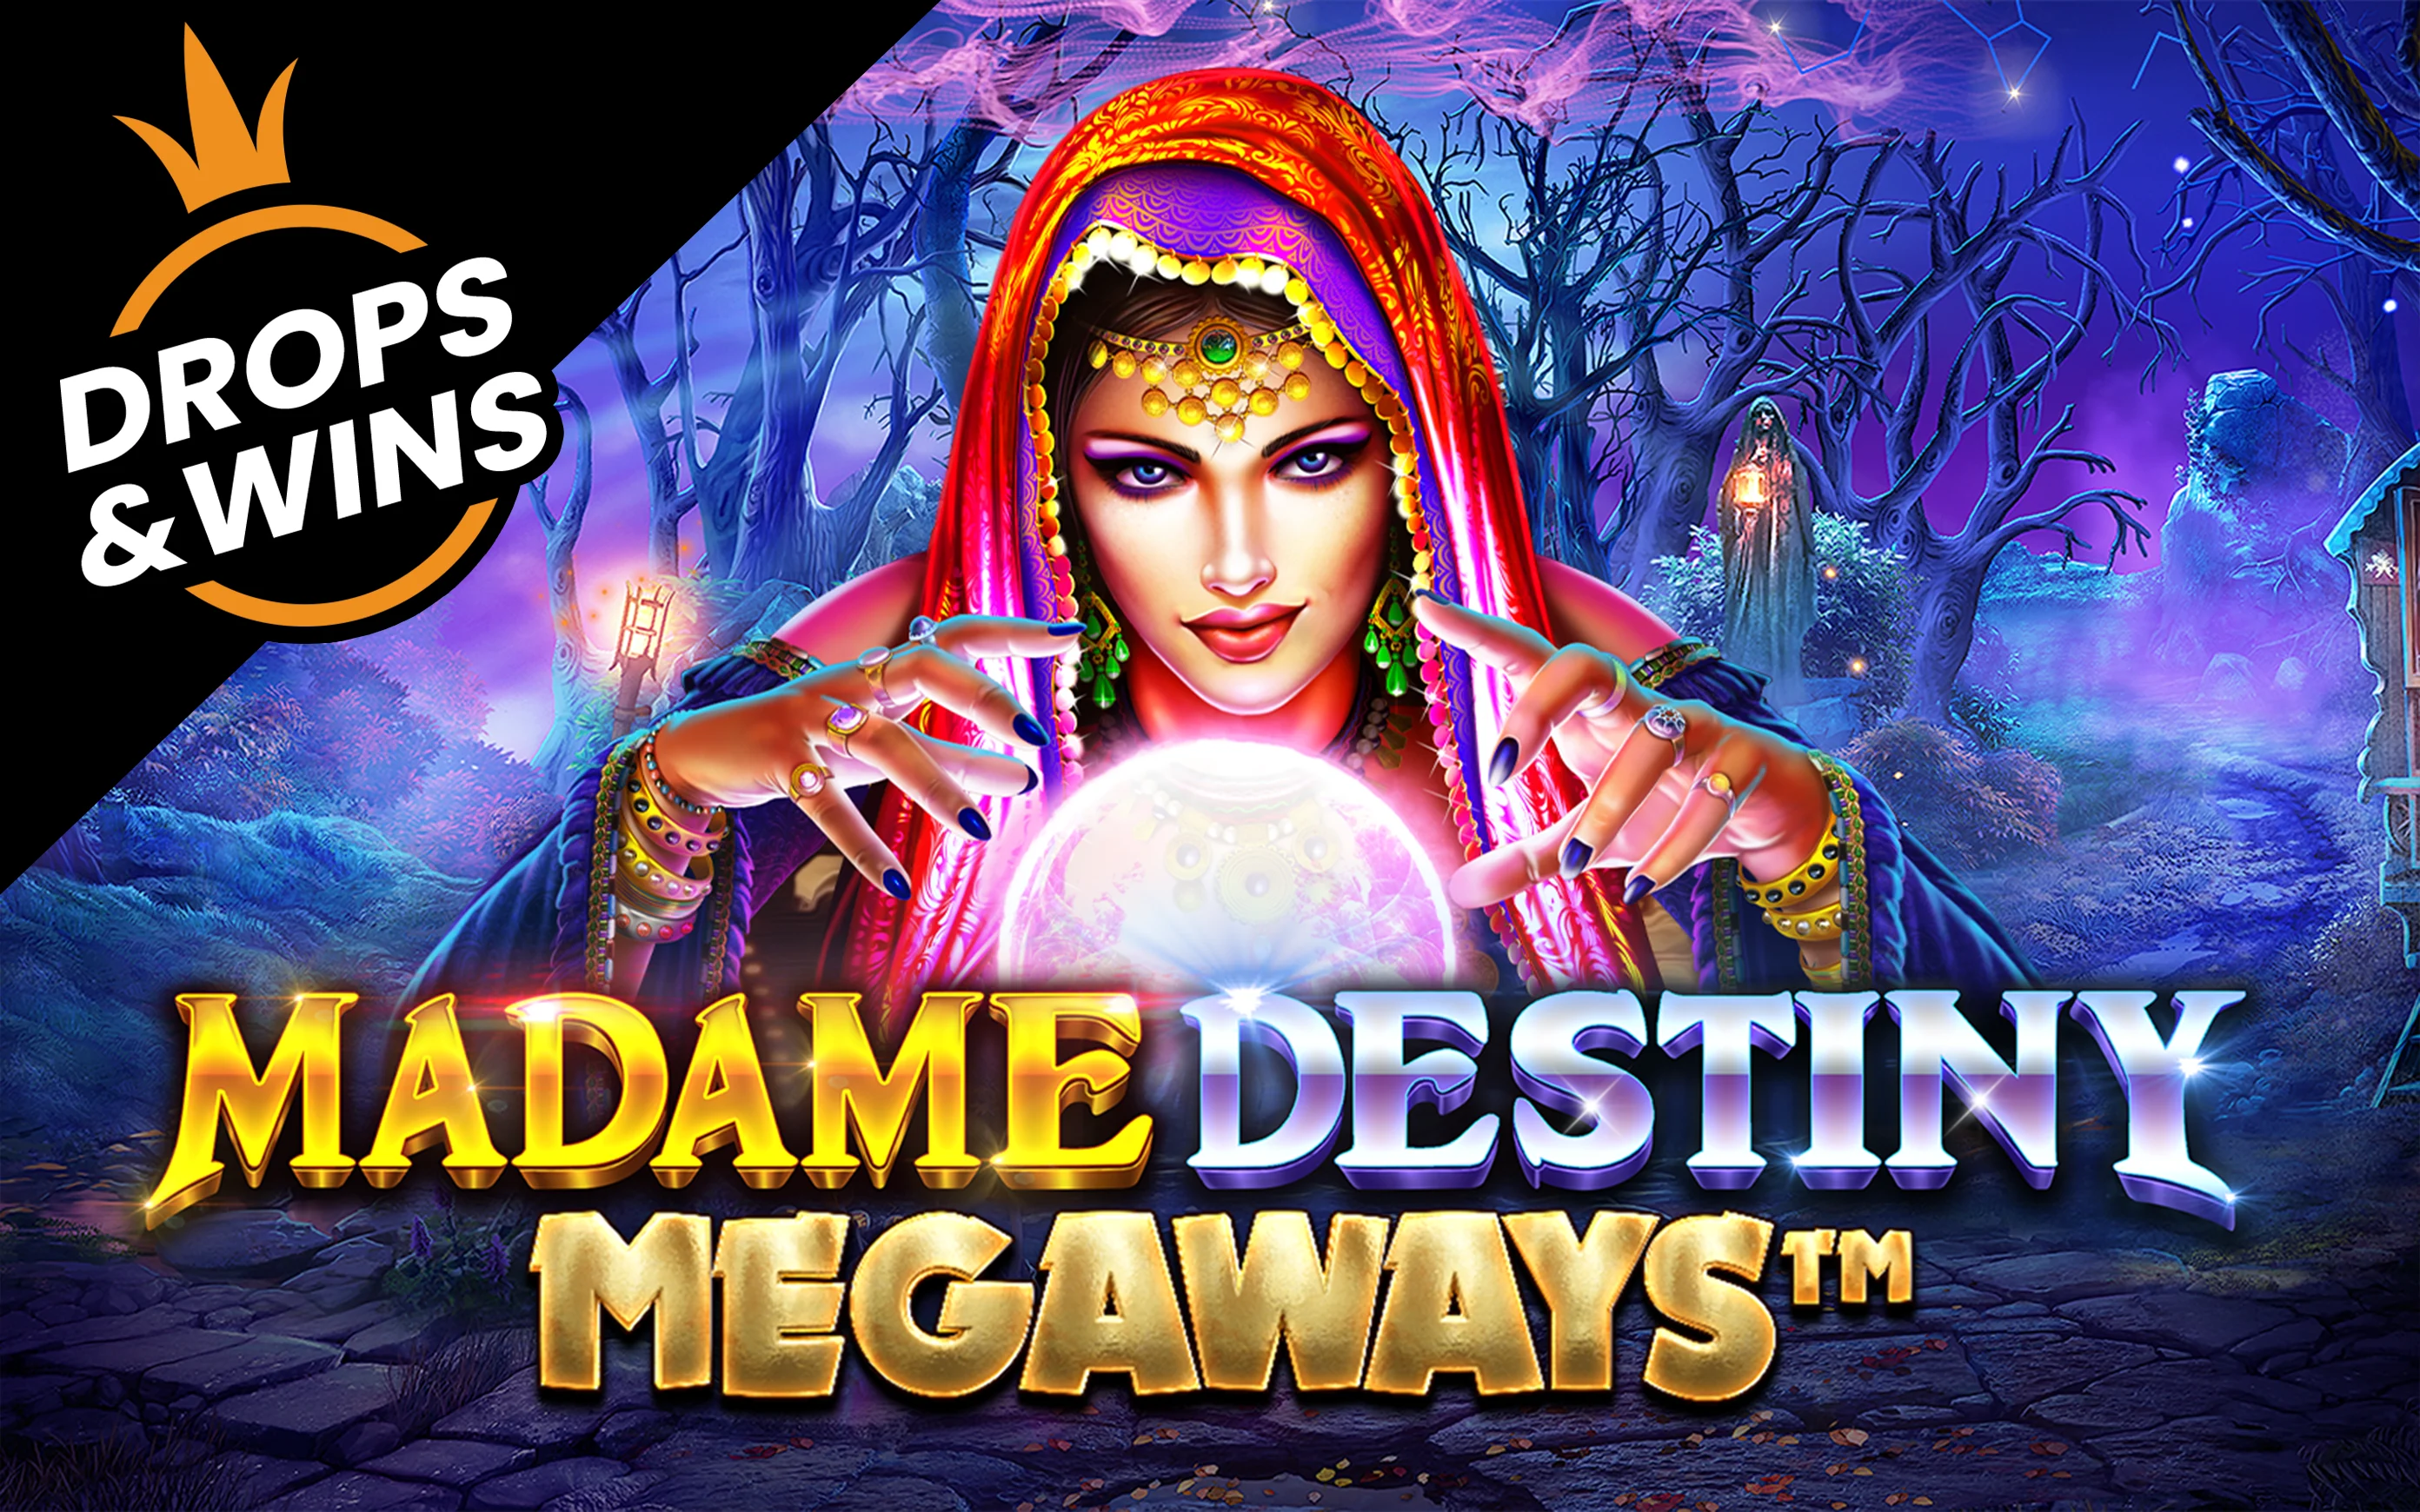 Play Madame Destiny Megaways™ on Starcasino.be online casino